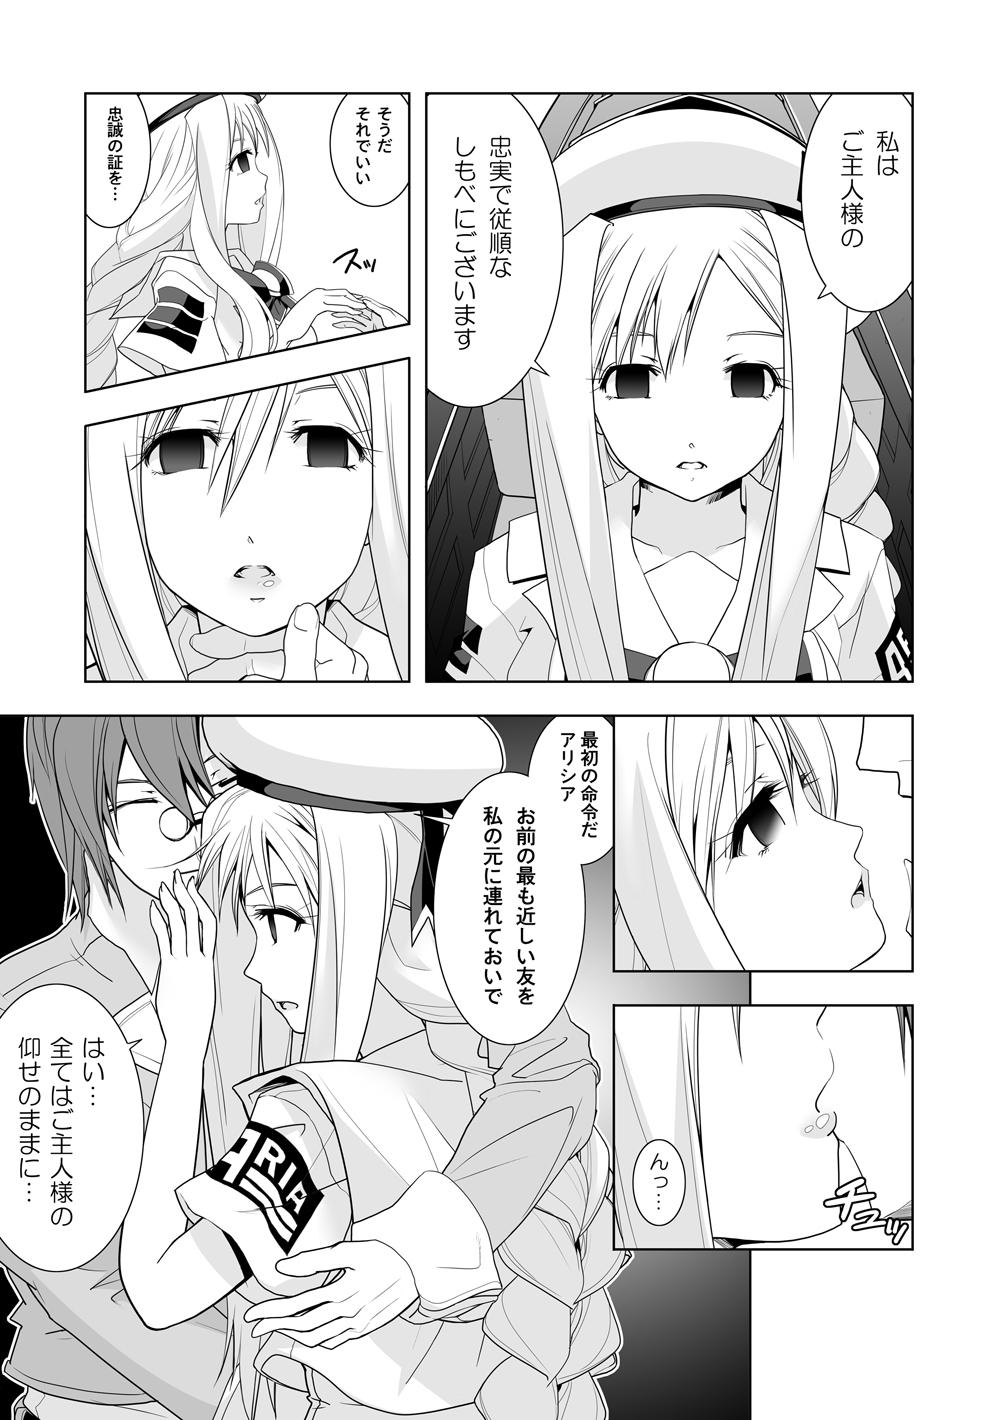 Flaca AR*A Mind-control Manga - Aria Danish - Page 3